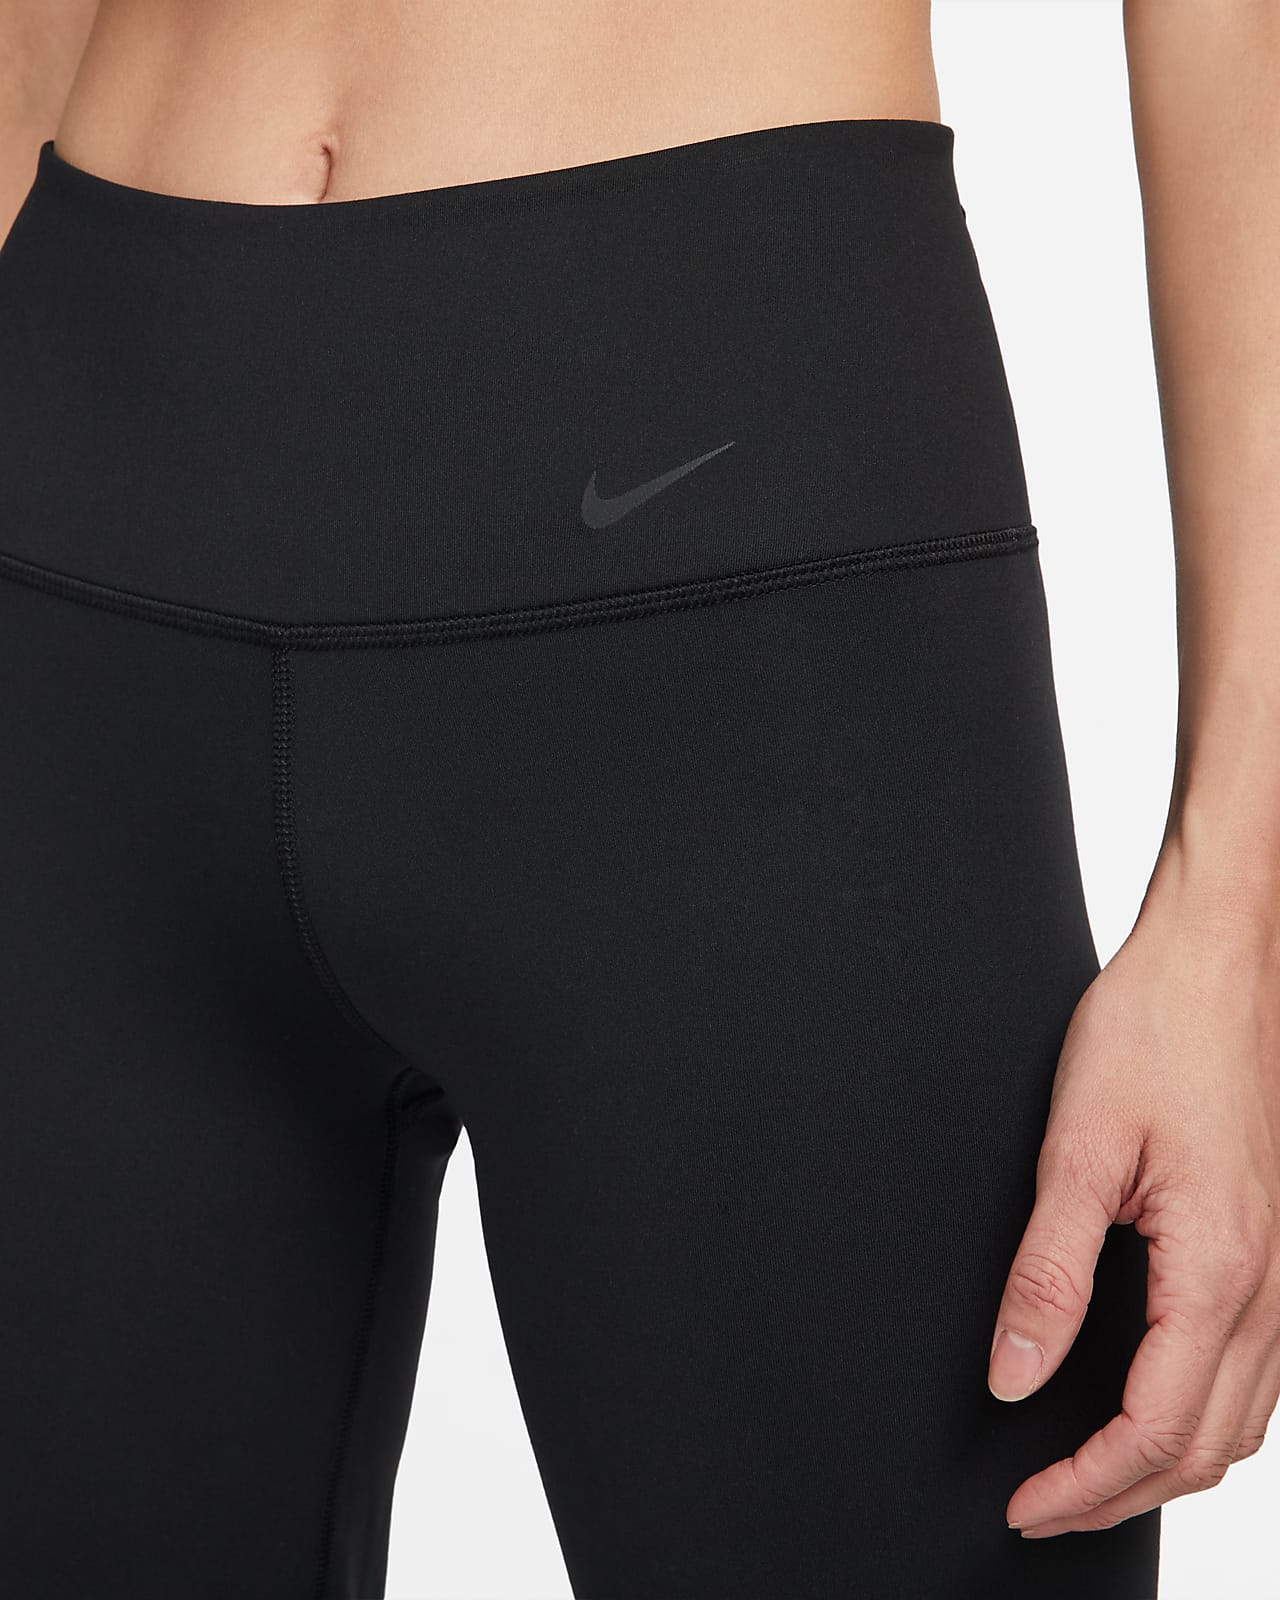 Nike Power Women's Training Trousers